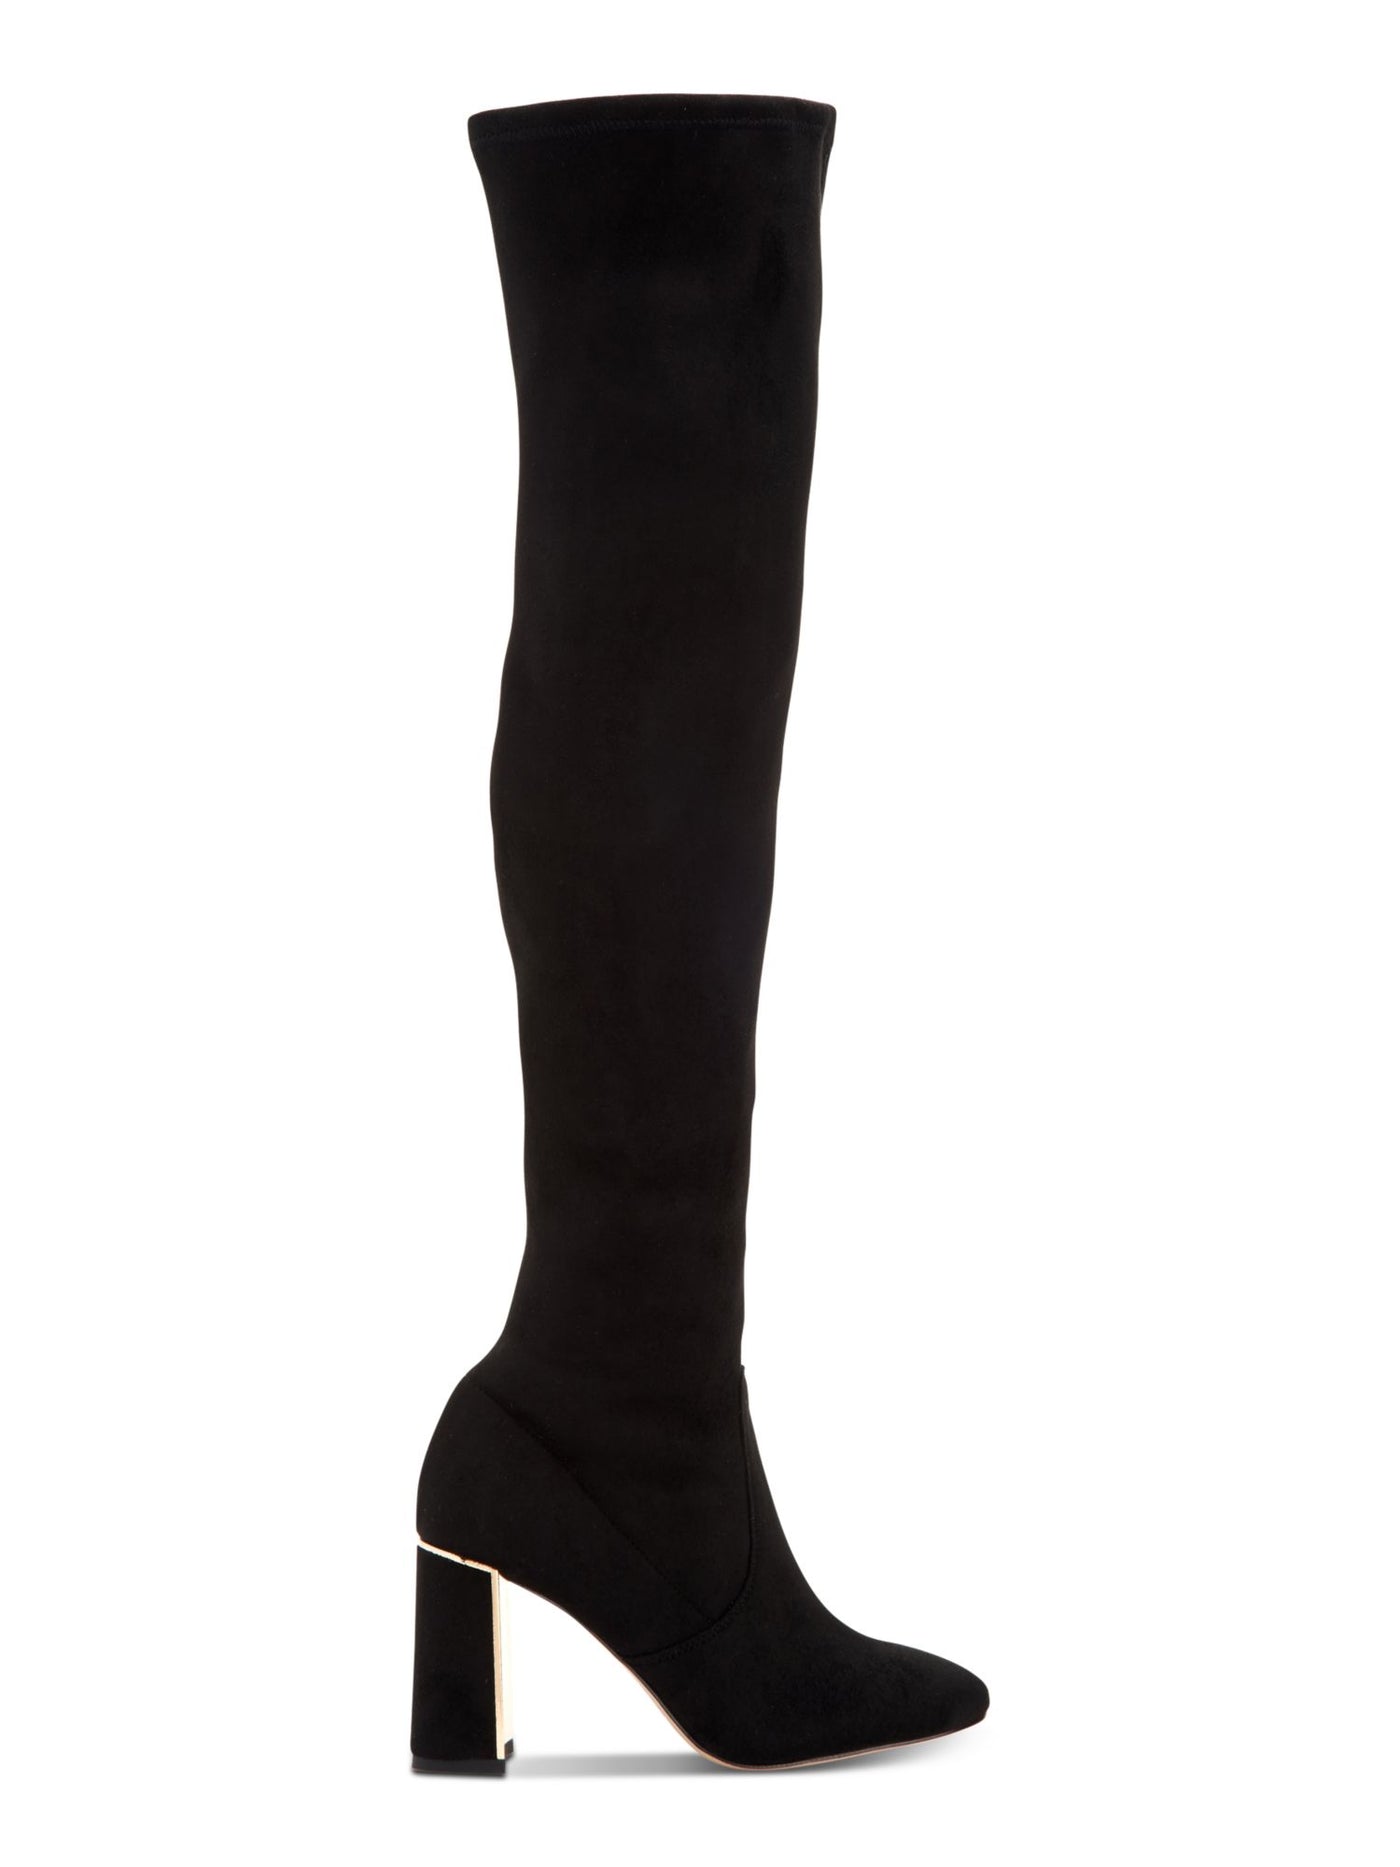 BCBGENERATION Womens Black Gold Metallic Flash Aliana Almond Toe Block Heel Zip-Up Boots Shoes 5.5 B